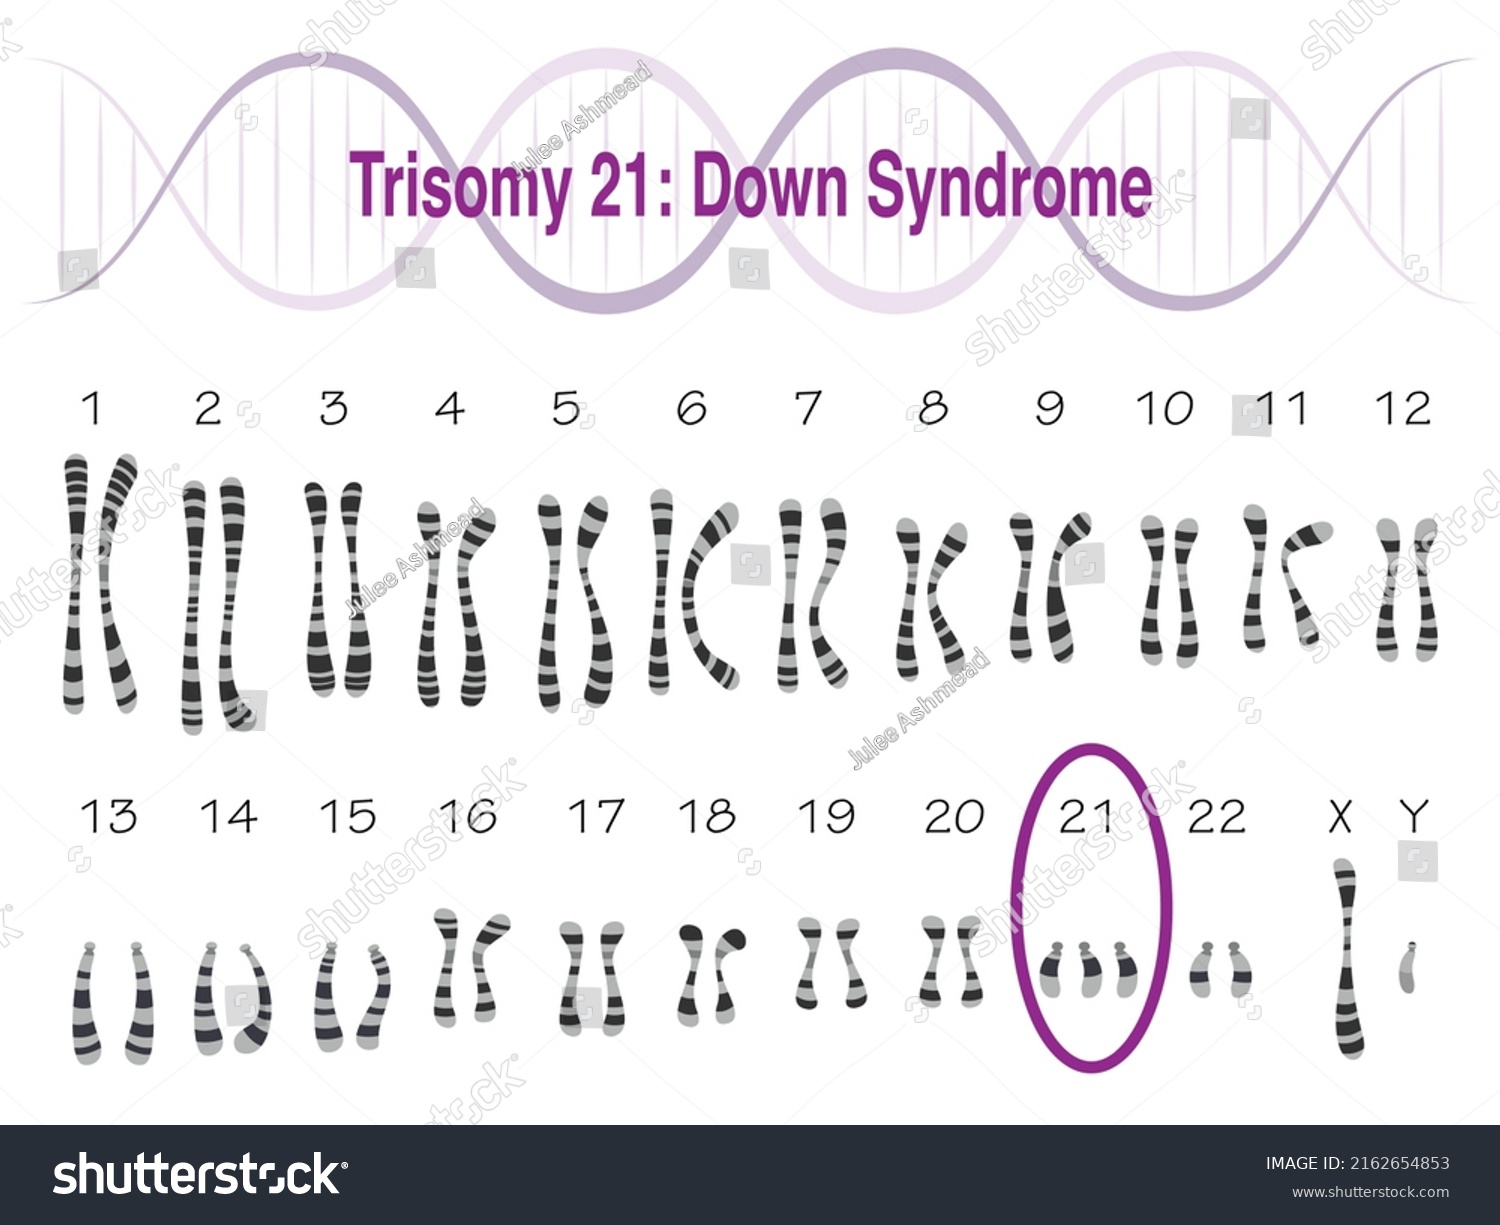 Trisomy 21 Down Syndrome Karyotype Stock Vector Royalty Free 2162654853 Shutterstock 6479